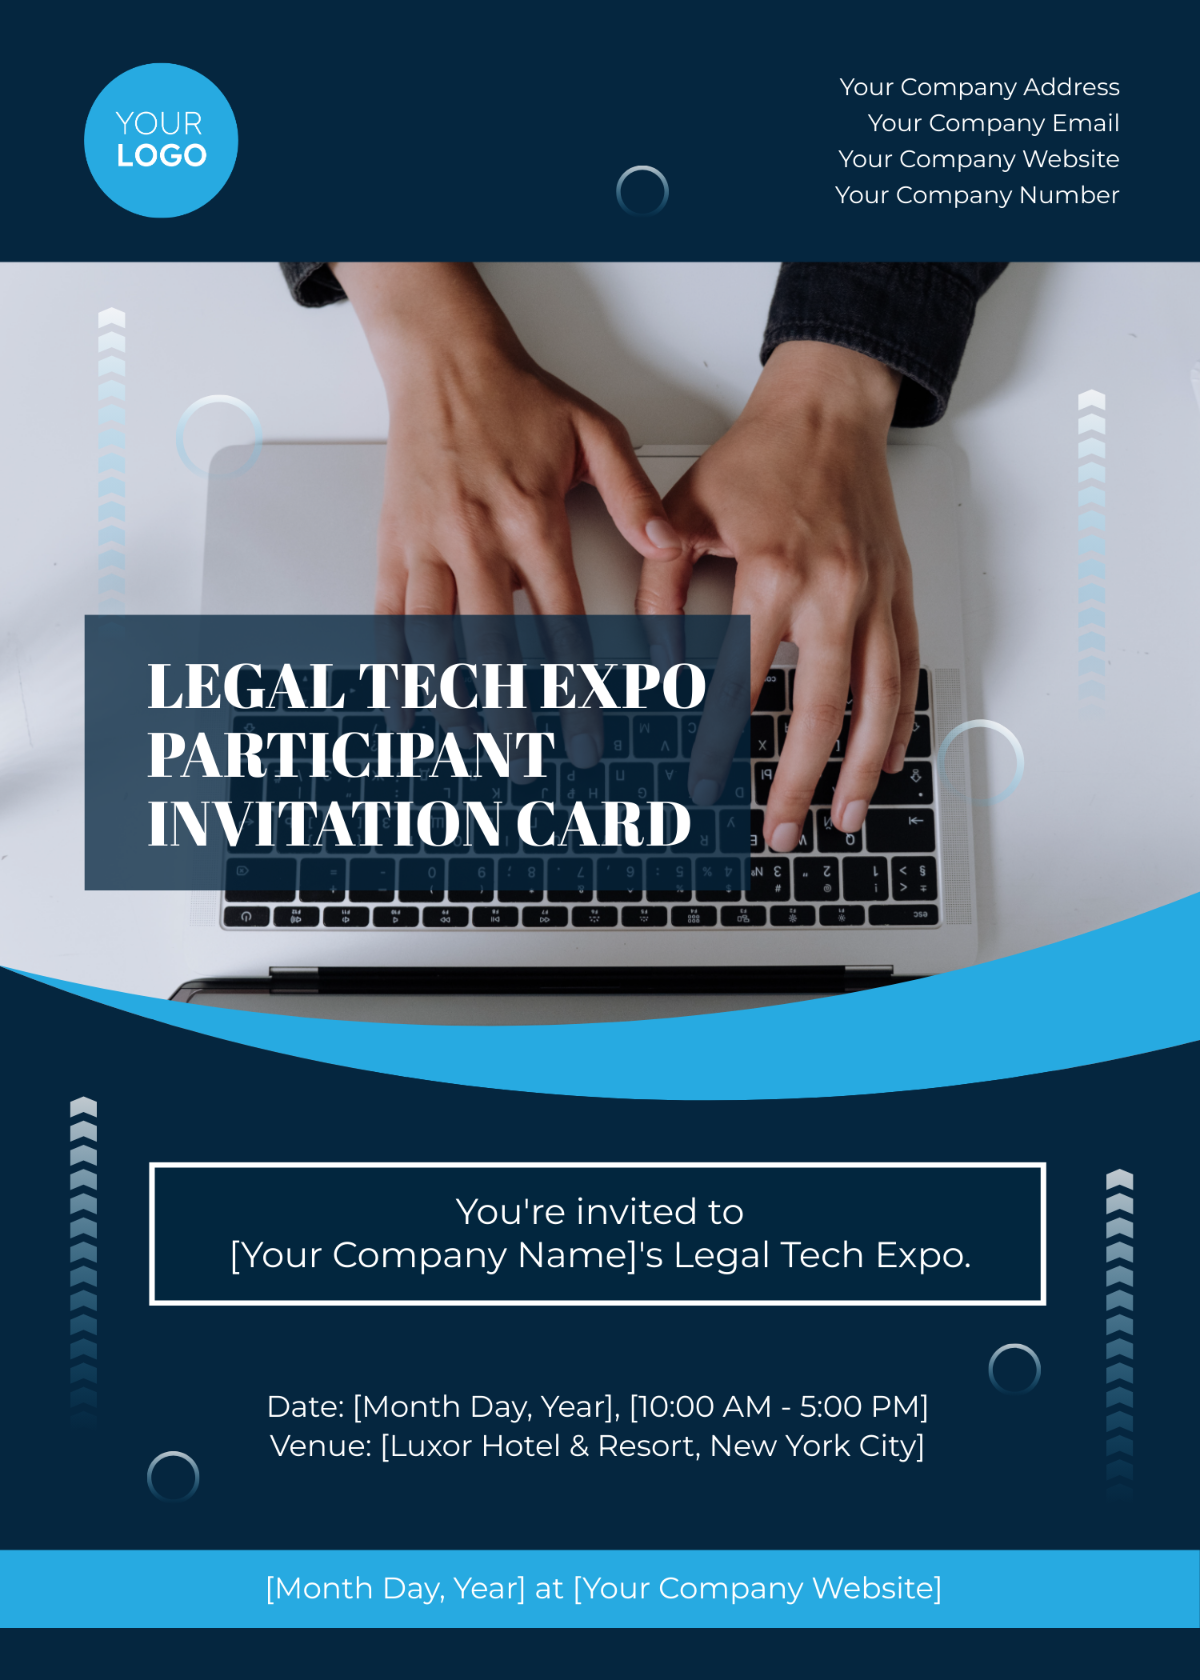 Legal Tech Expo Participant Invitation Card Template